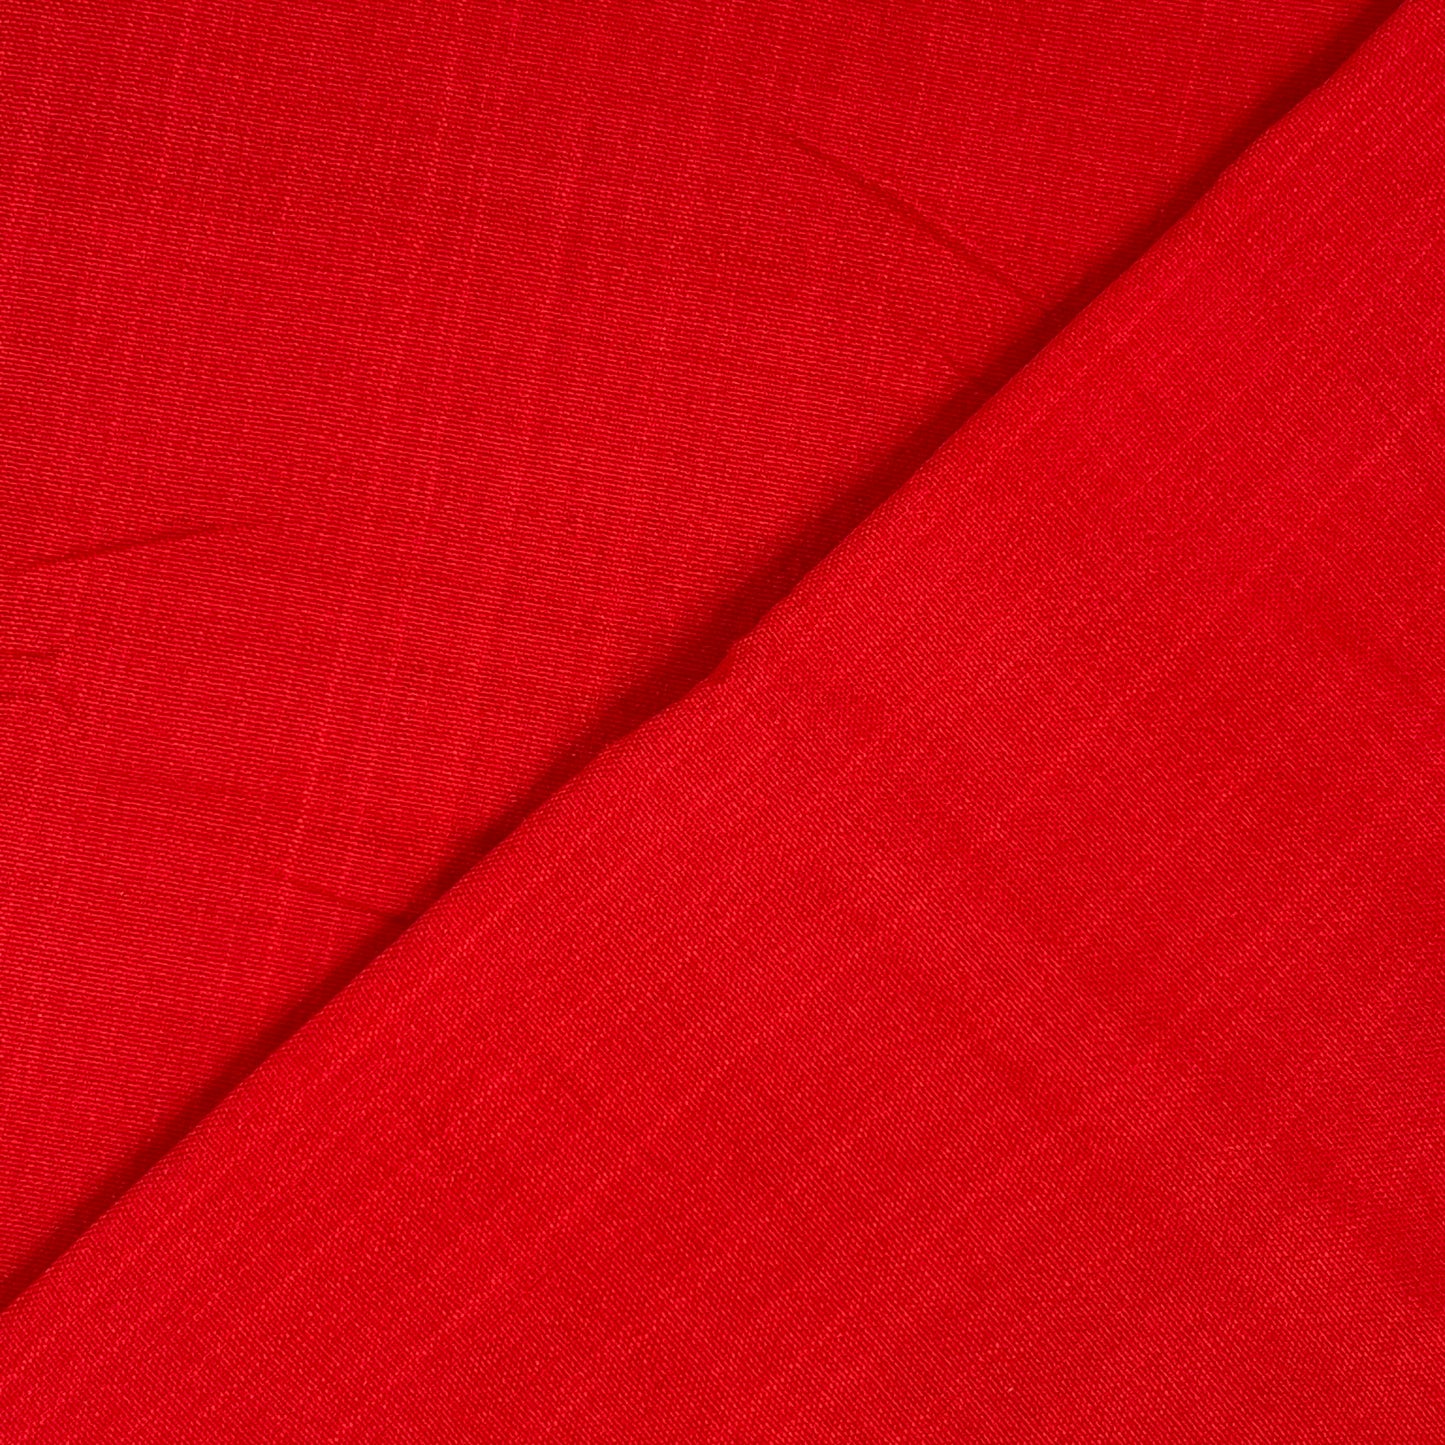 Red Filipino Handwoven Blanket